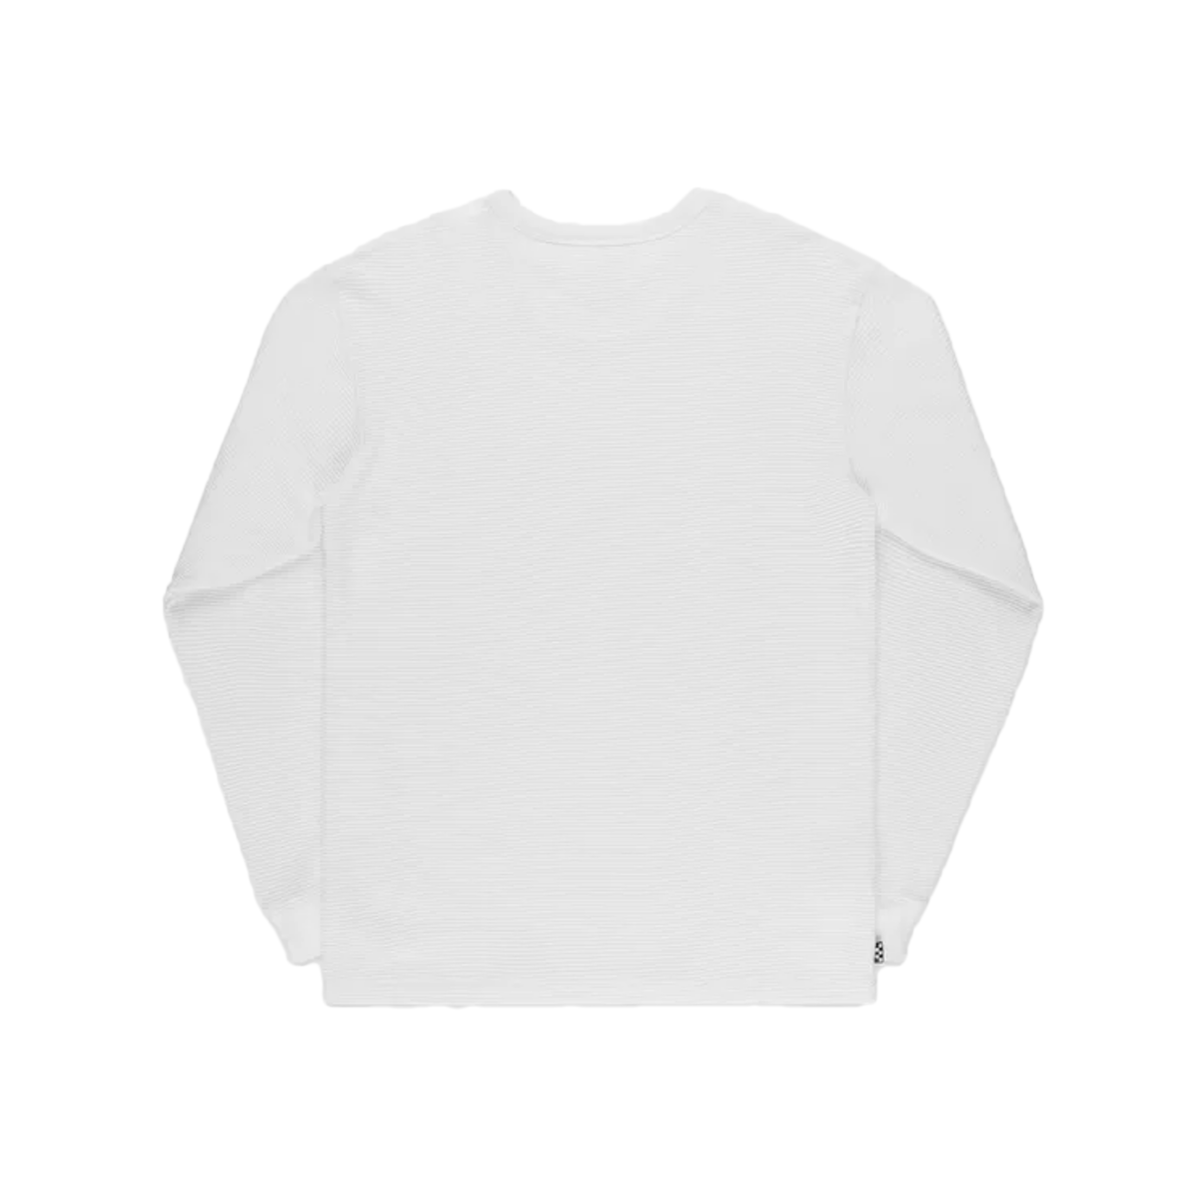 Vans Nick Michel Long Sleeve Thermal Shirt - White